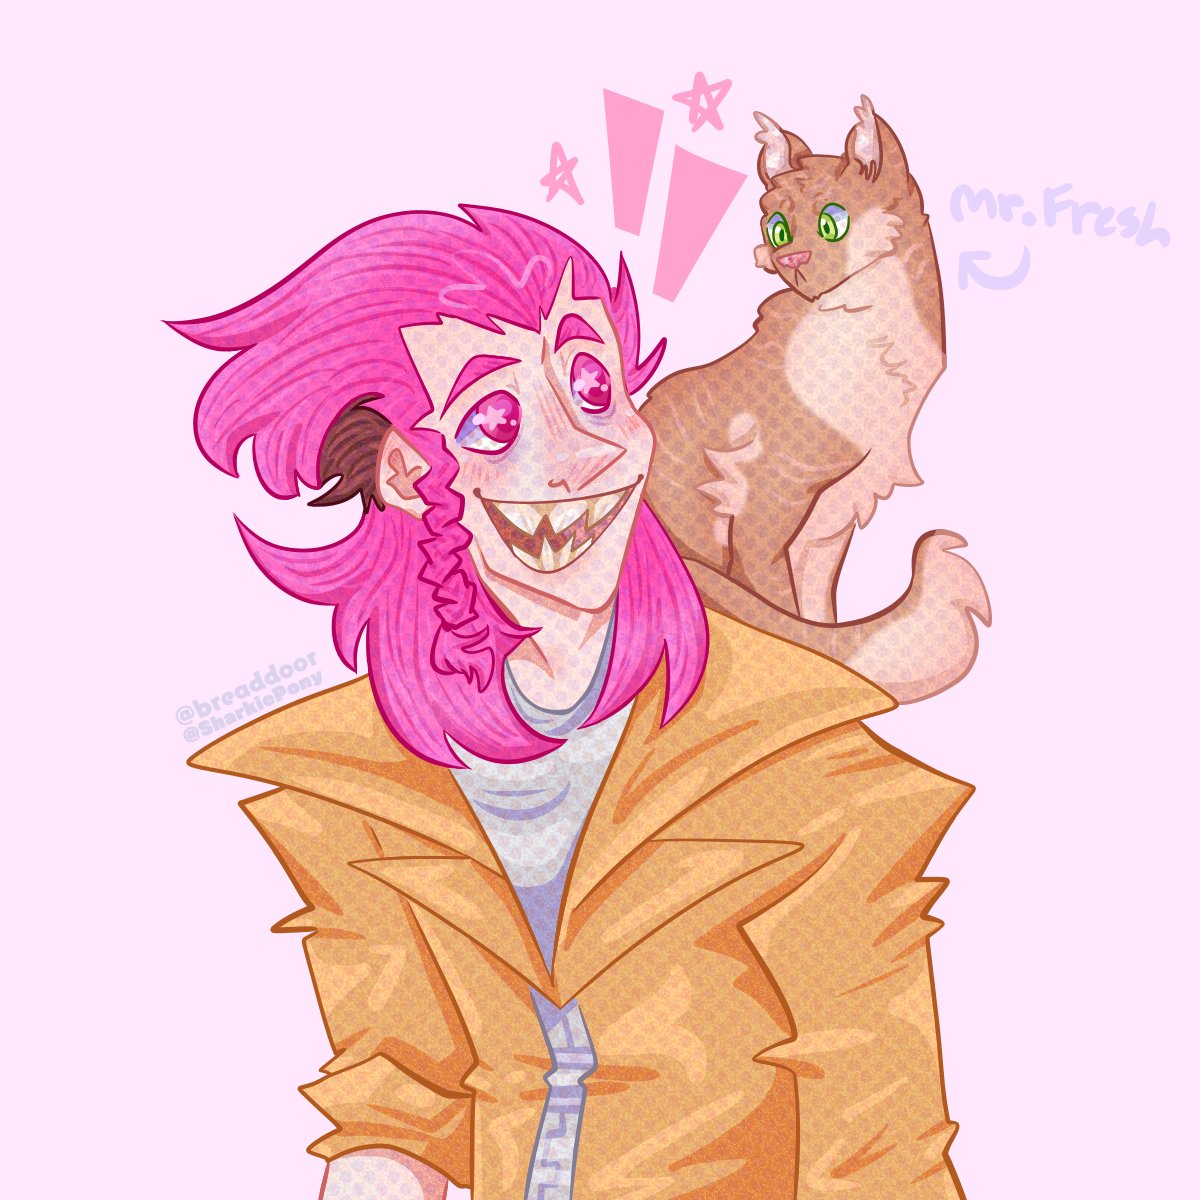 I had to add Mr Fresh, I love Hello Street Cat

#hellostreetcat #happycanteen #danganronpa #kazuichi